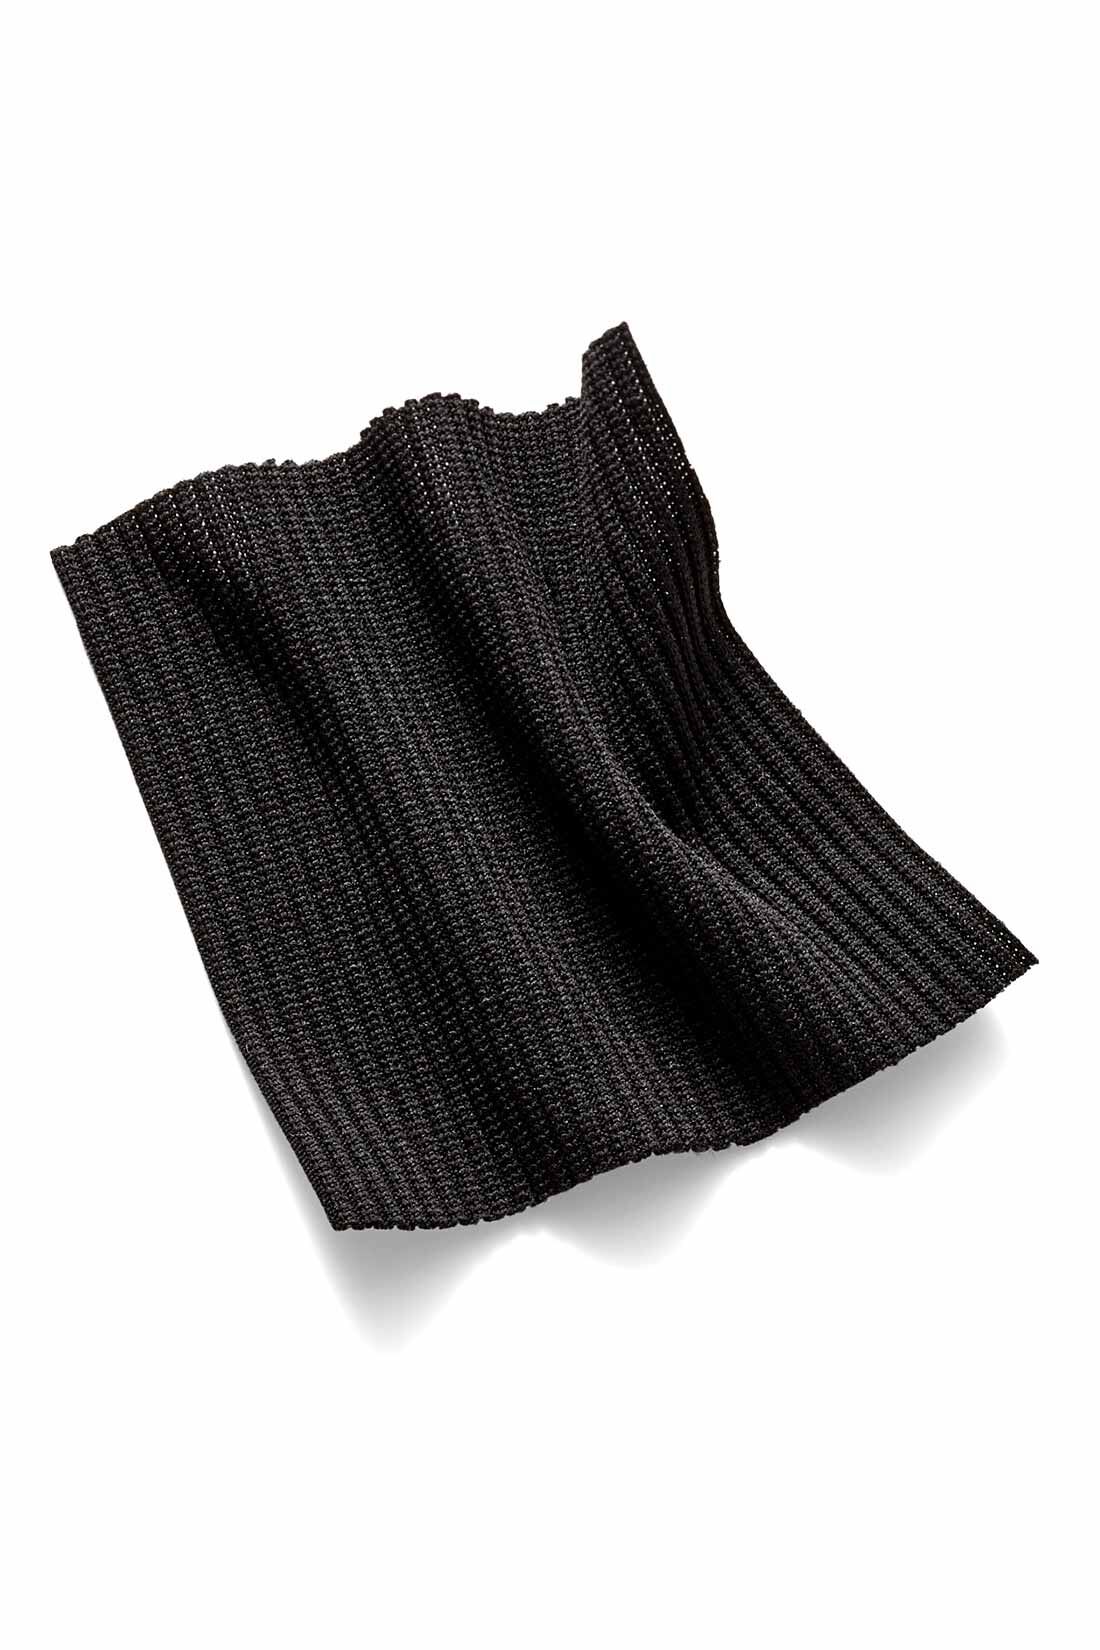 IEDIT|IEDIT[イディット]　福田麻琴さんコラボ リブ素材のスイムウェア3点セット〈ブラック〉|肌に張り付きにくく着心地も快適なストレッチのきいた細めリブ素材。洋服のように着られる上品なブラック。